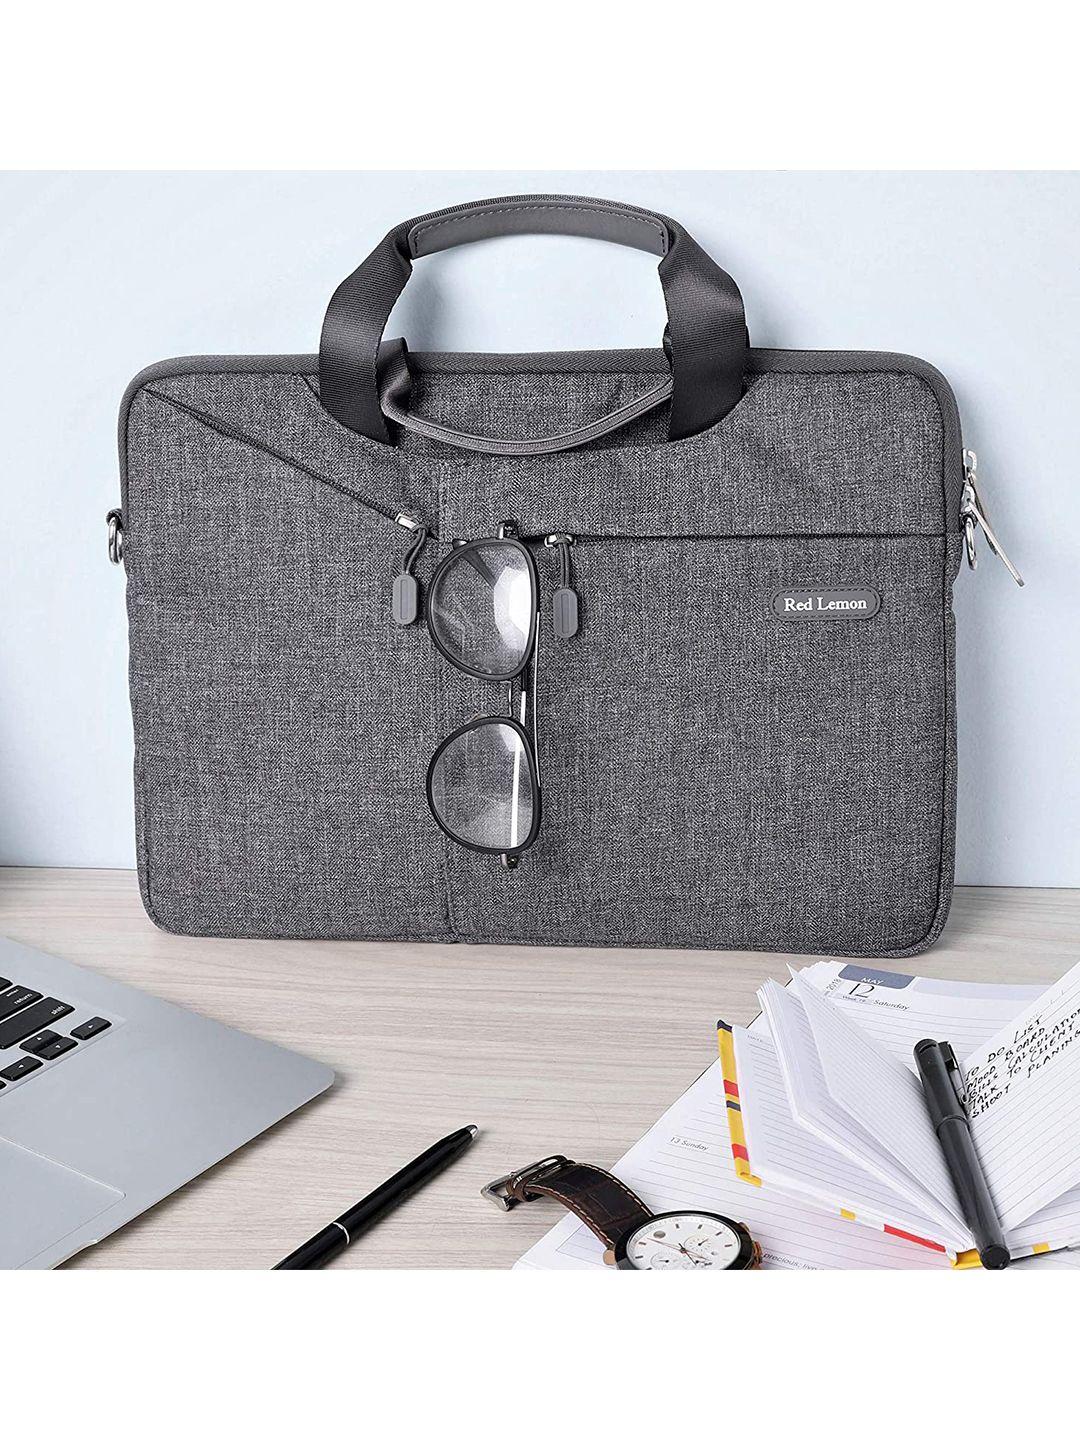 red lemon unisex grey laptop bag